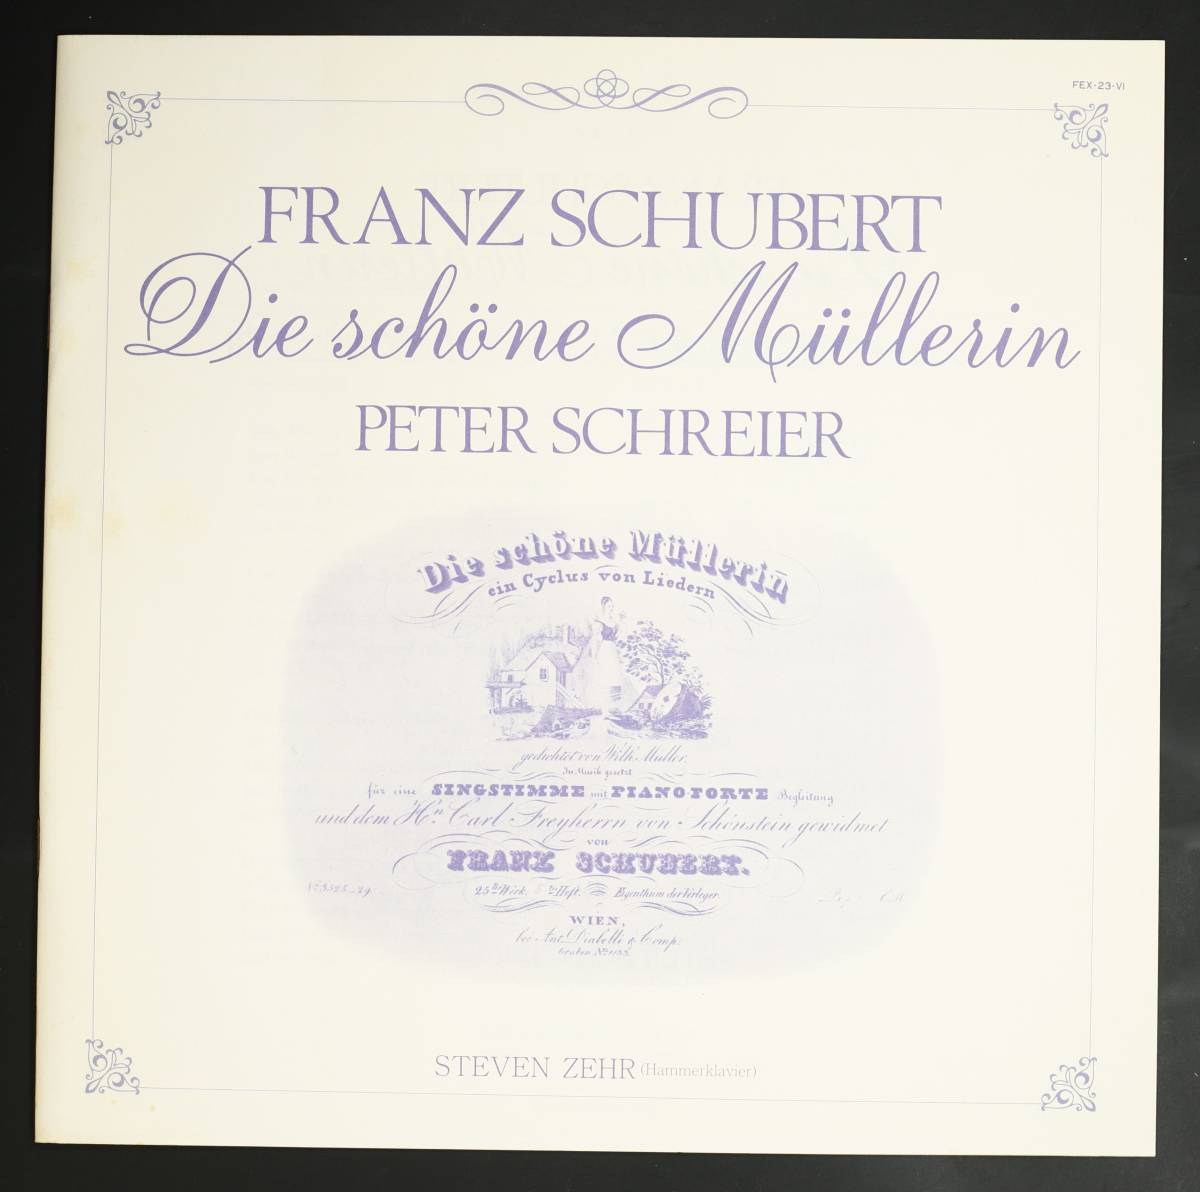 【PromoLP】ペーター・シュライアー/シューベルト:歌曲集(並良品,高品質・重量盤,1980,Peter Schreier)_画像4